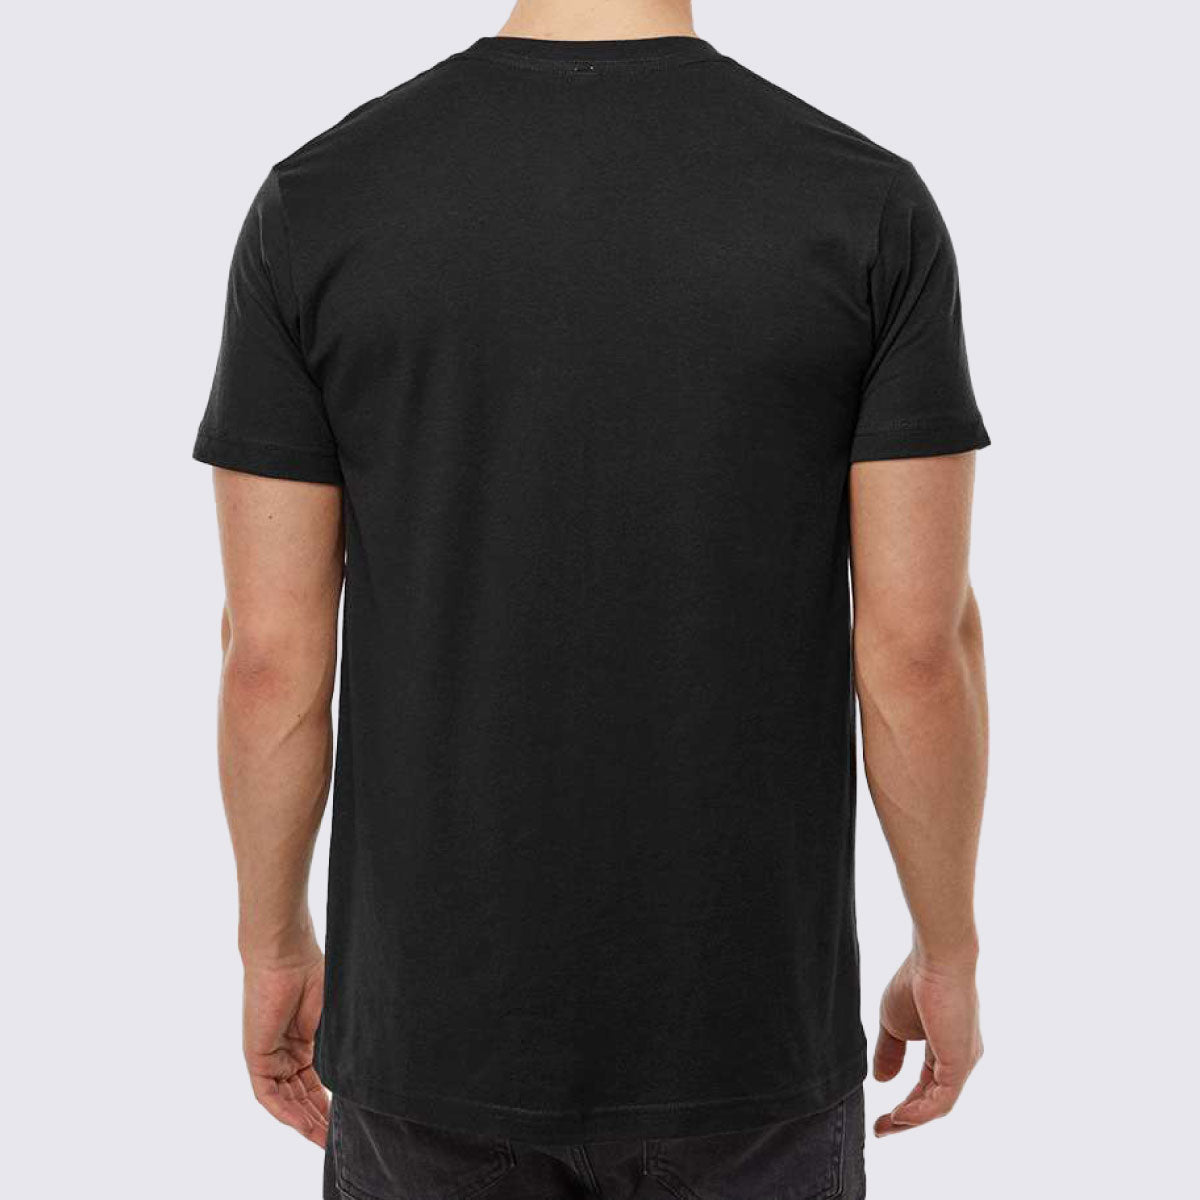 The Limit Does Not Exist Unisex Fine Jersey T-Shirt